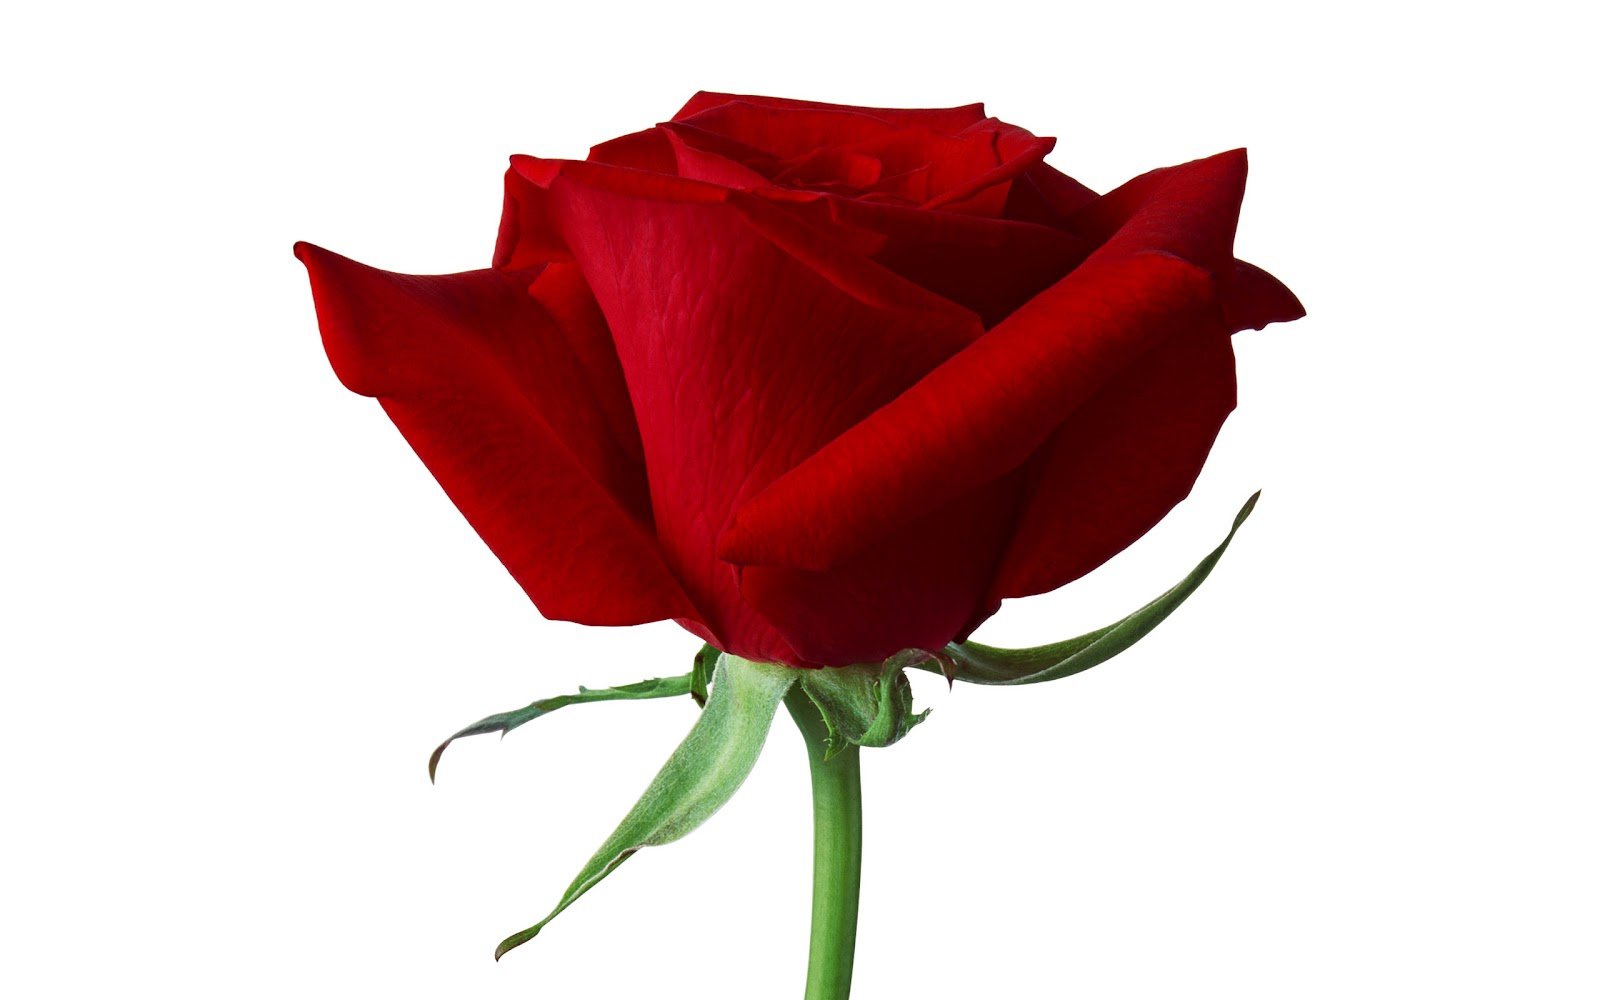 sola rosa roja fondo de pantalla hd,rosas de jardín,rojo,flor,rosa,pétalo